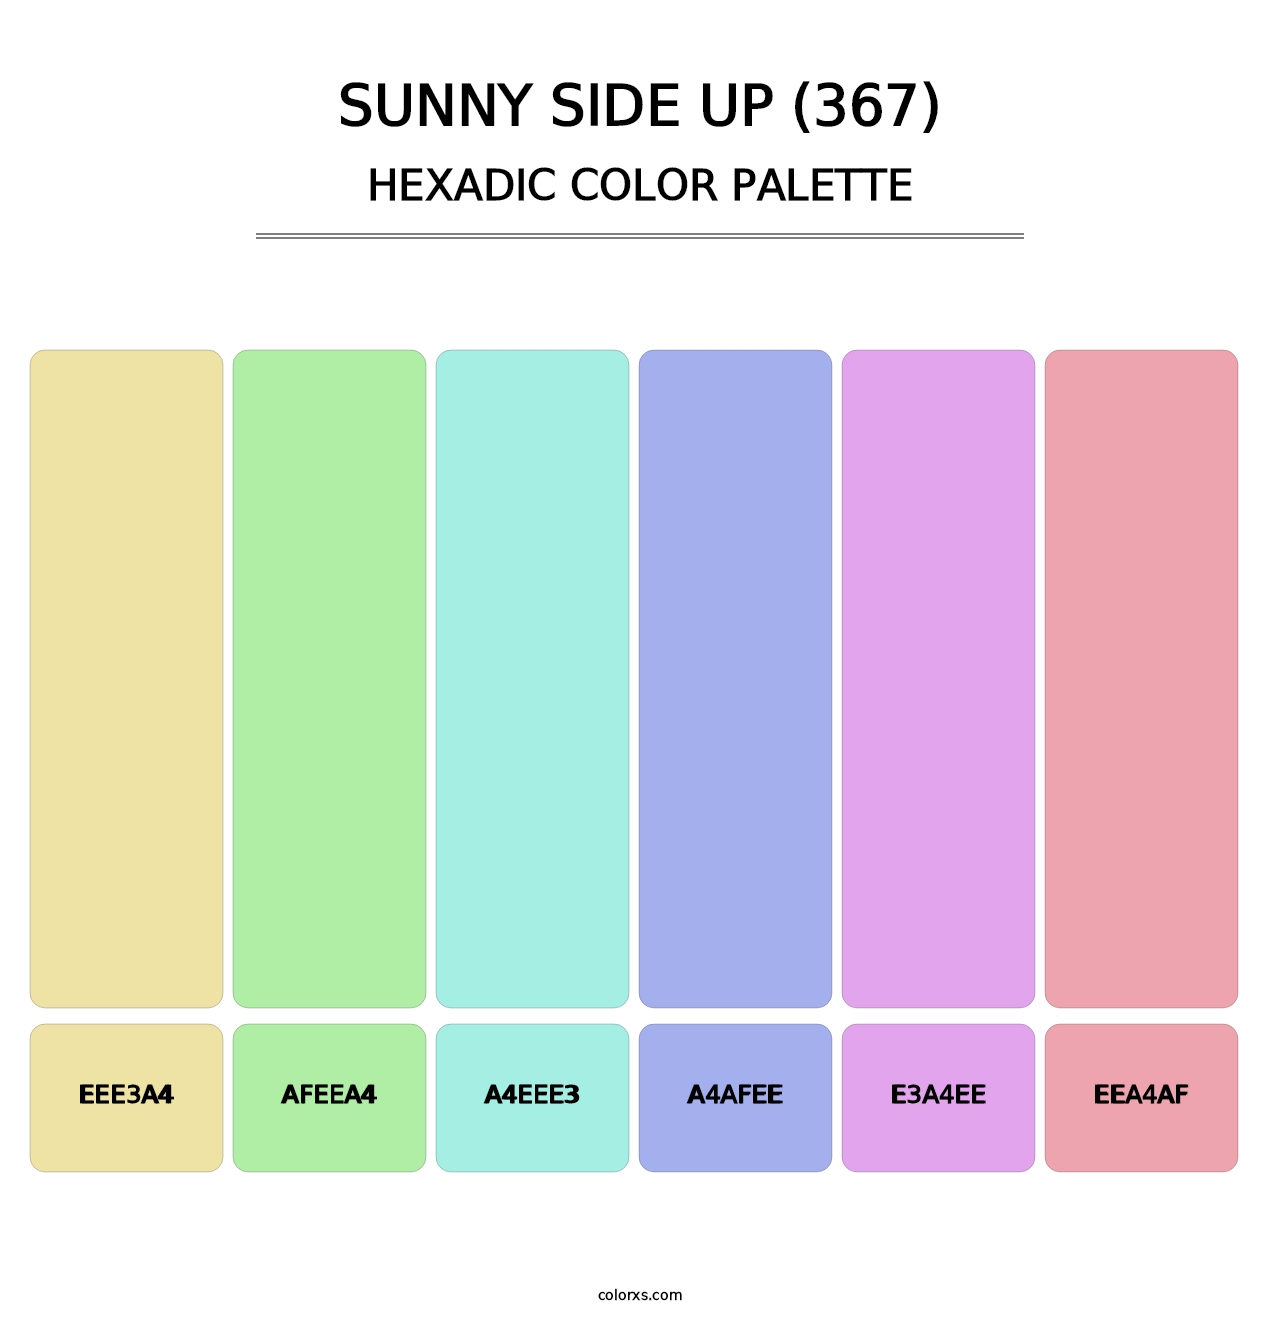 Sunny Side Up (367) - Hexadic Color Palette